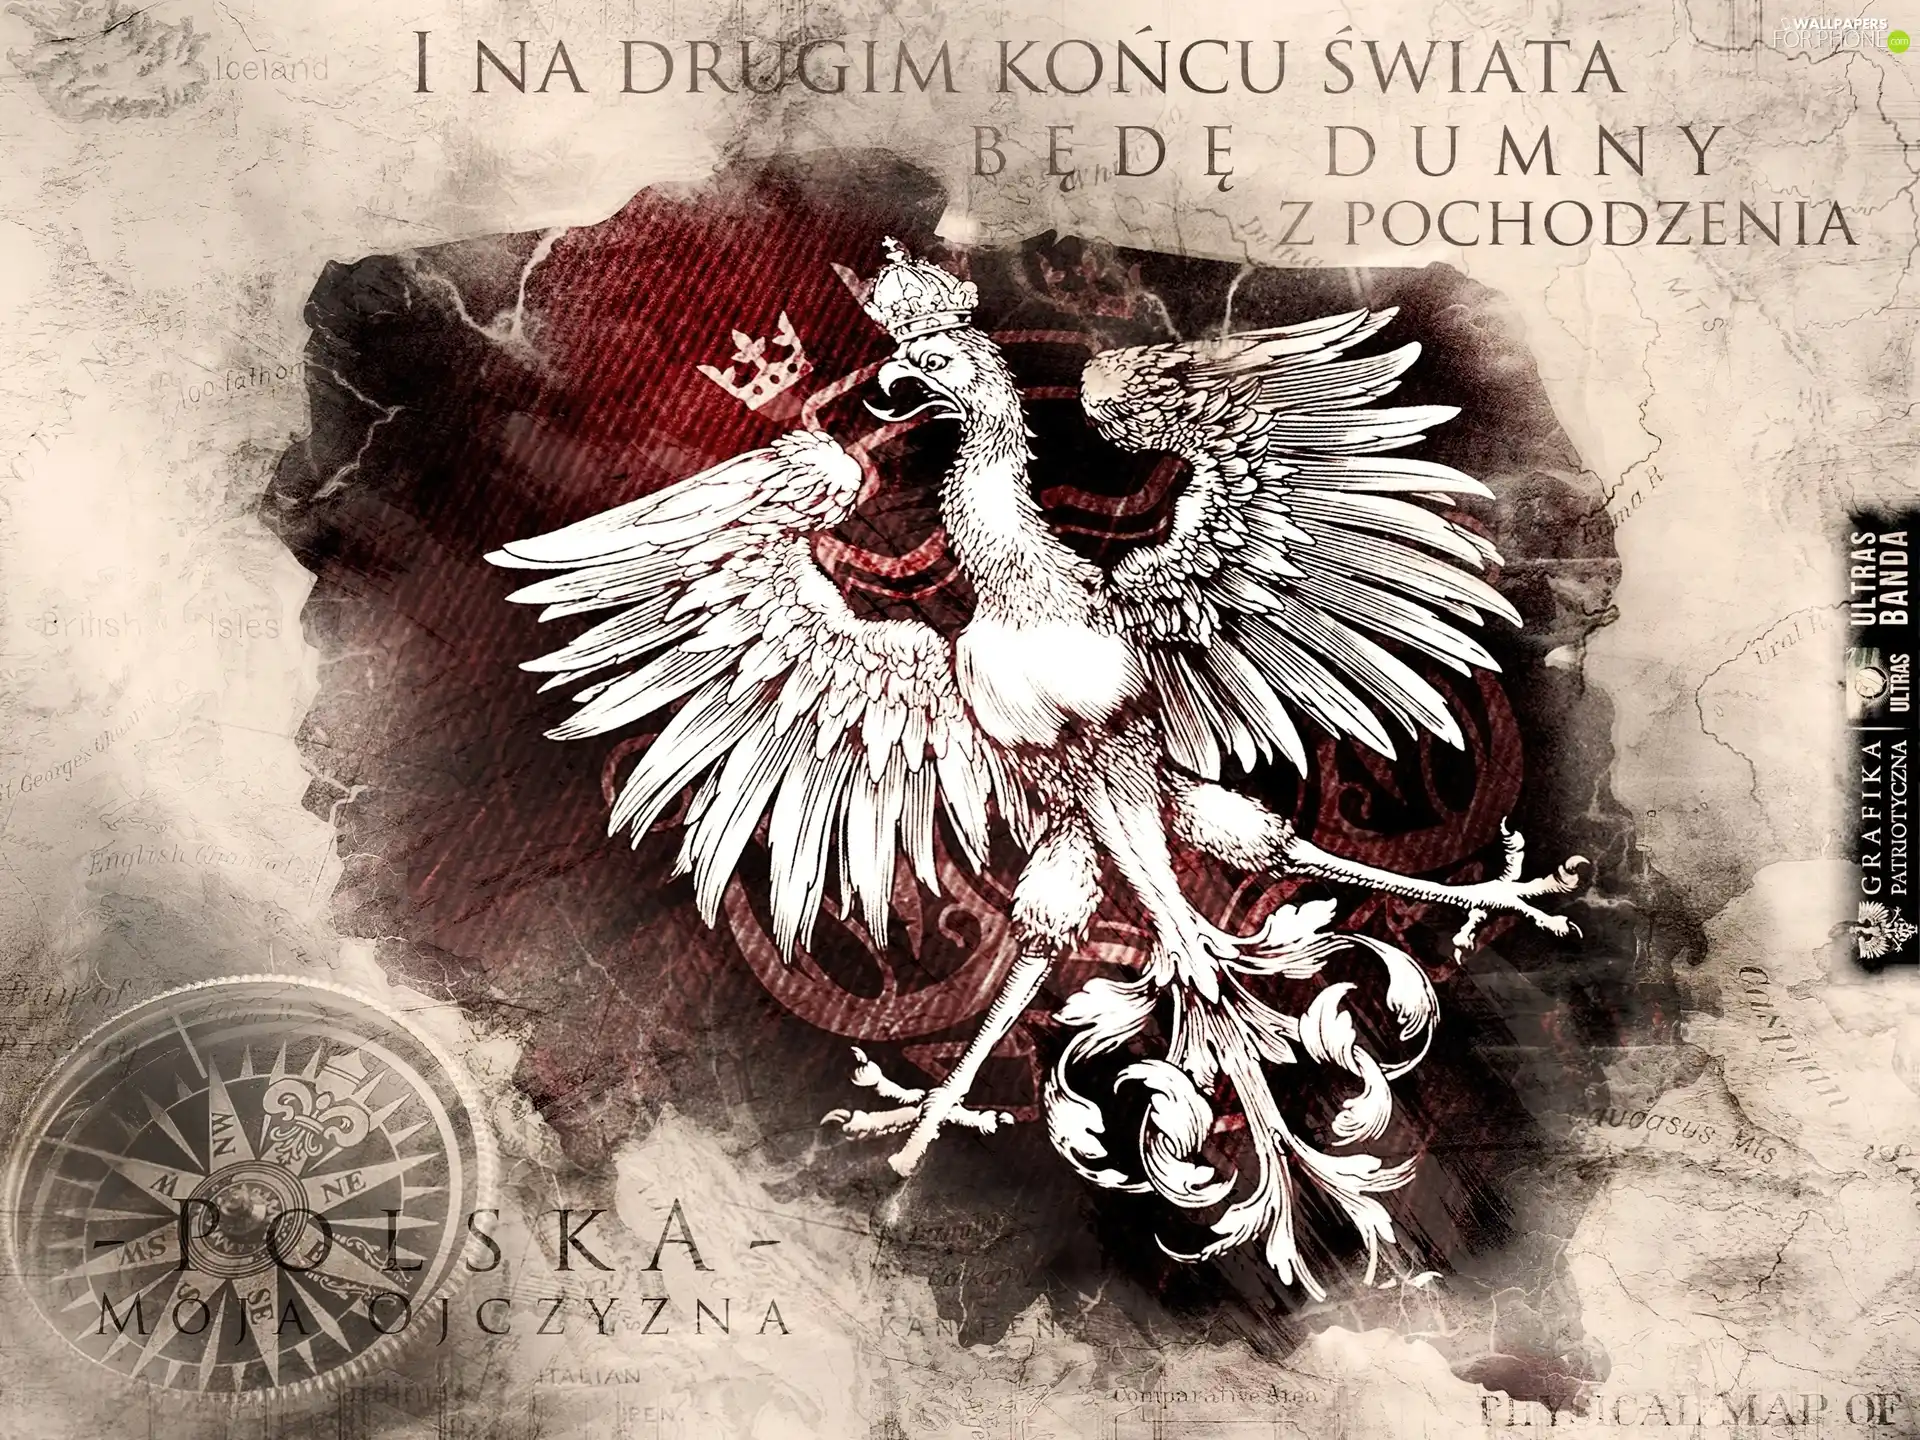 graphics, Poland, emblem, Map